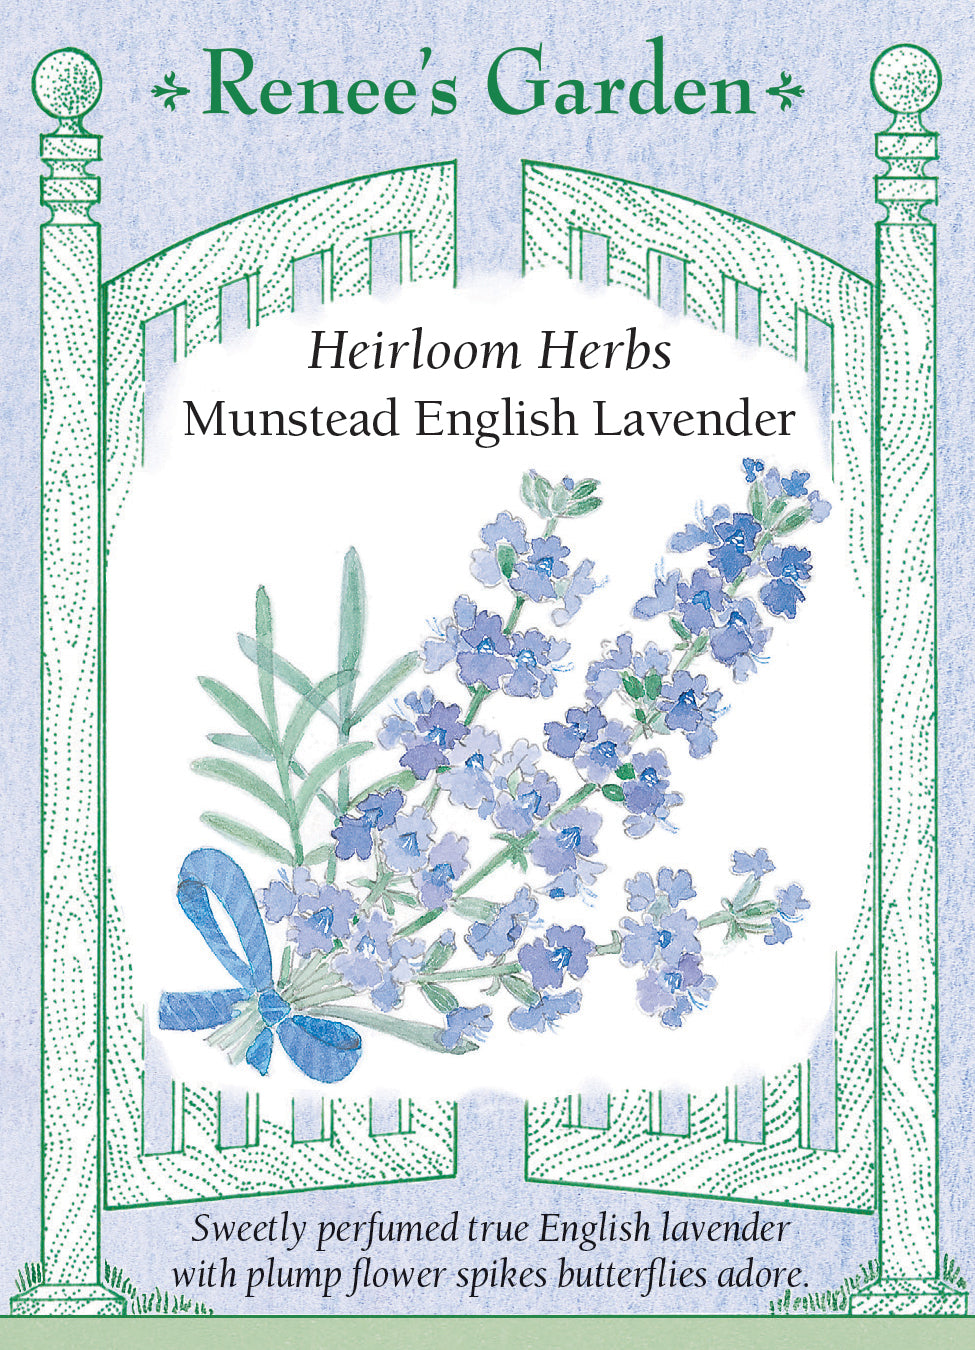 'Munstead English Lavender' Heirloom Herbs | Renee's Garden Seeds